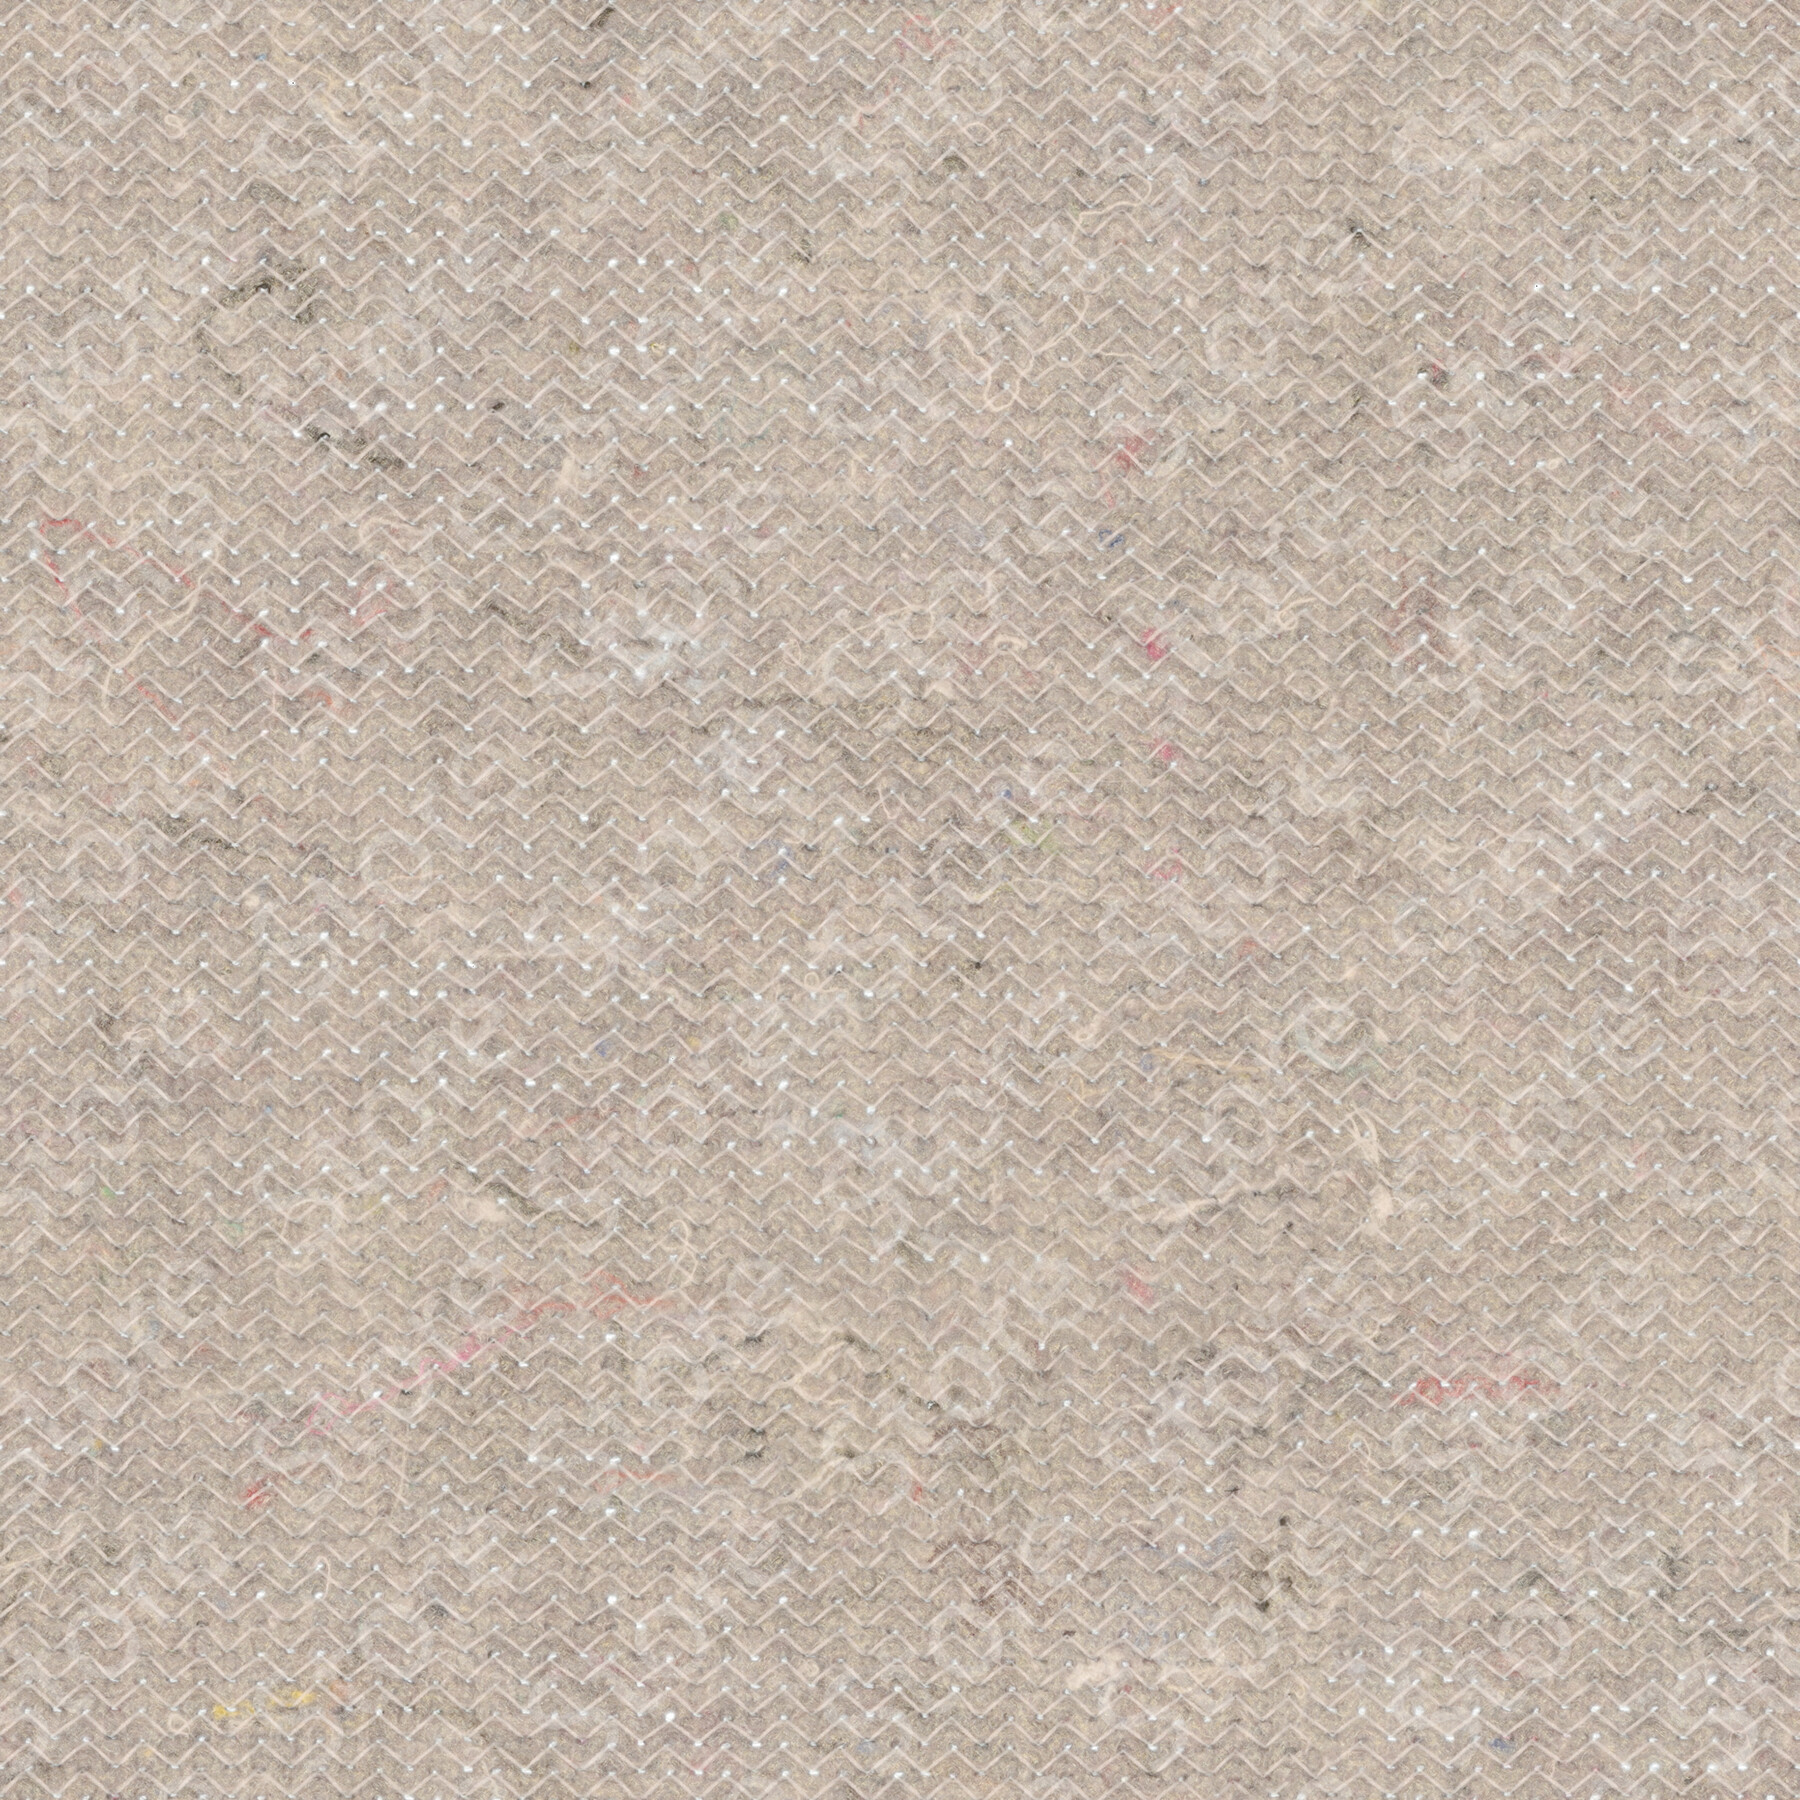 Fabric Seamless Texture Patterns 2k (2048*2048) PNG 10 JPG, 57% OFF